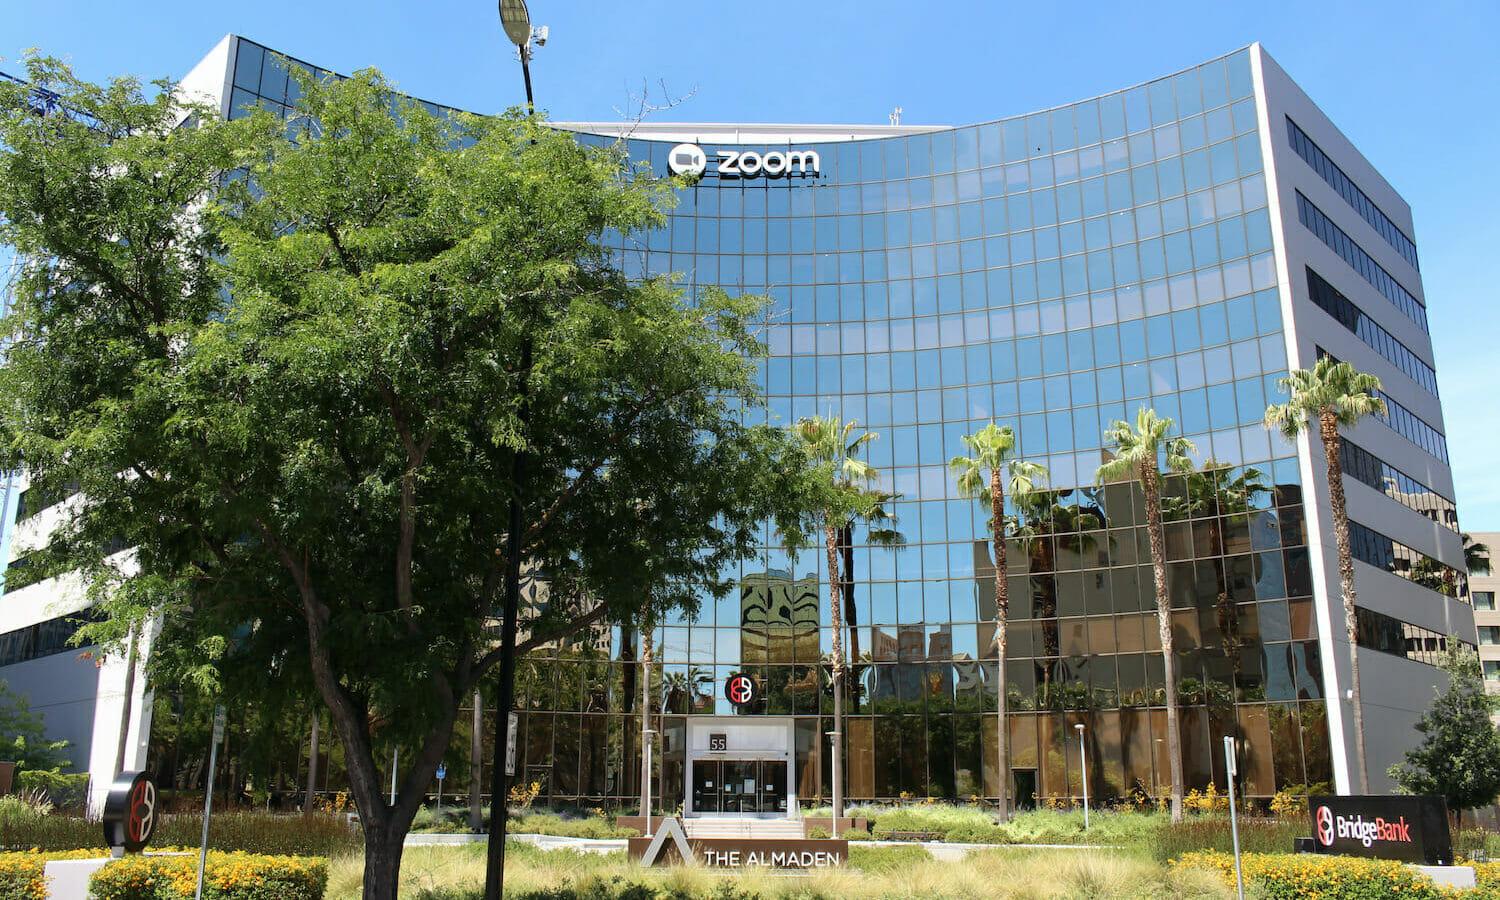 Zoom headquarters on Almaden Boulevard in San Jose, California. (Coolcaesar via Creative Commons Attribution-Share Alike 4.0 International license)